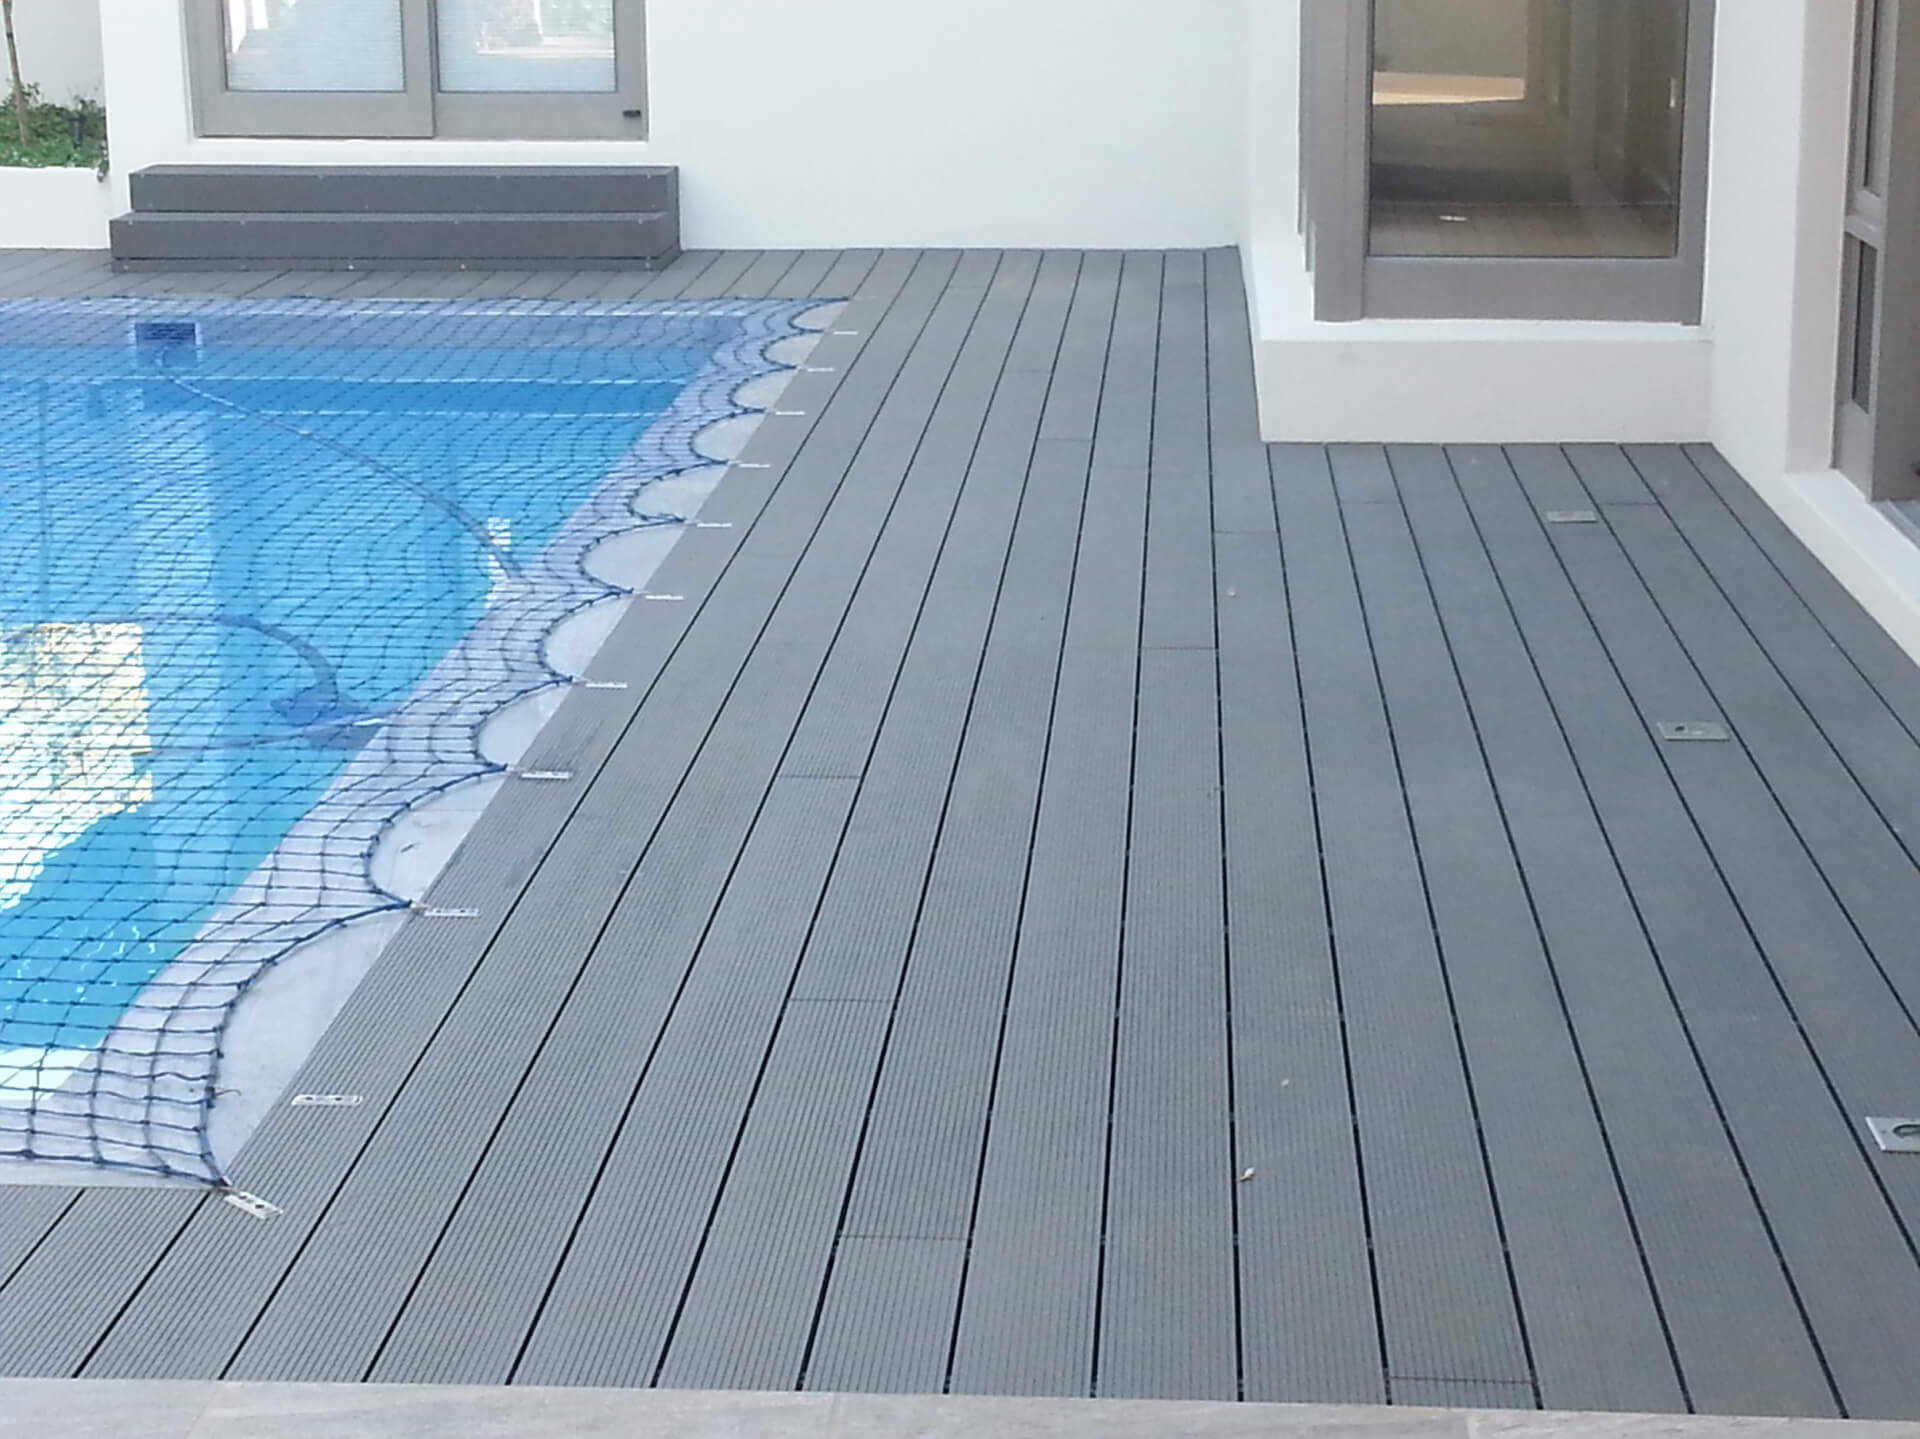 Composite deck pool surround